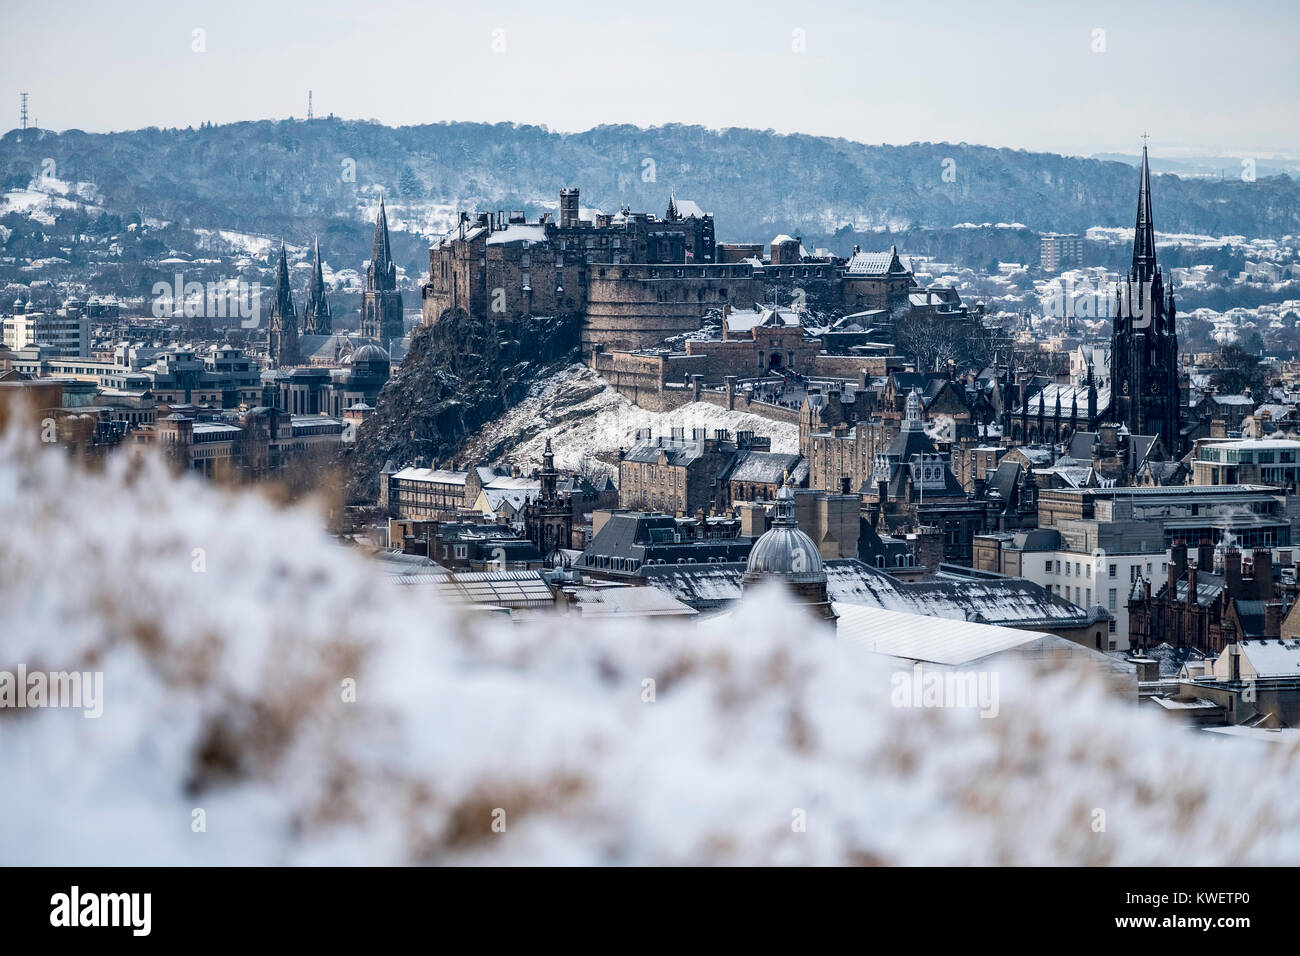 Snow falls on city of Edinburgh in December. Skyline view of city